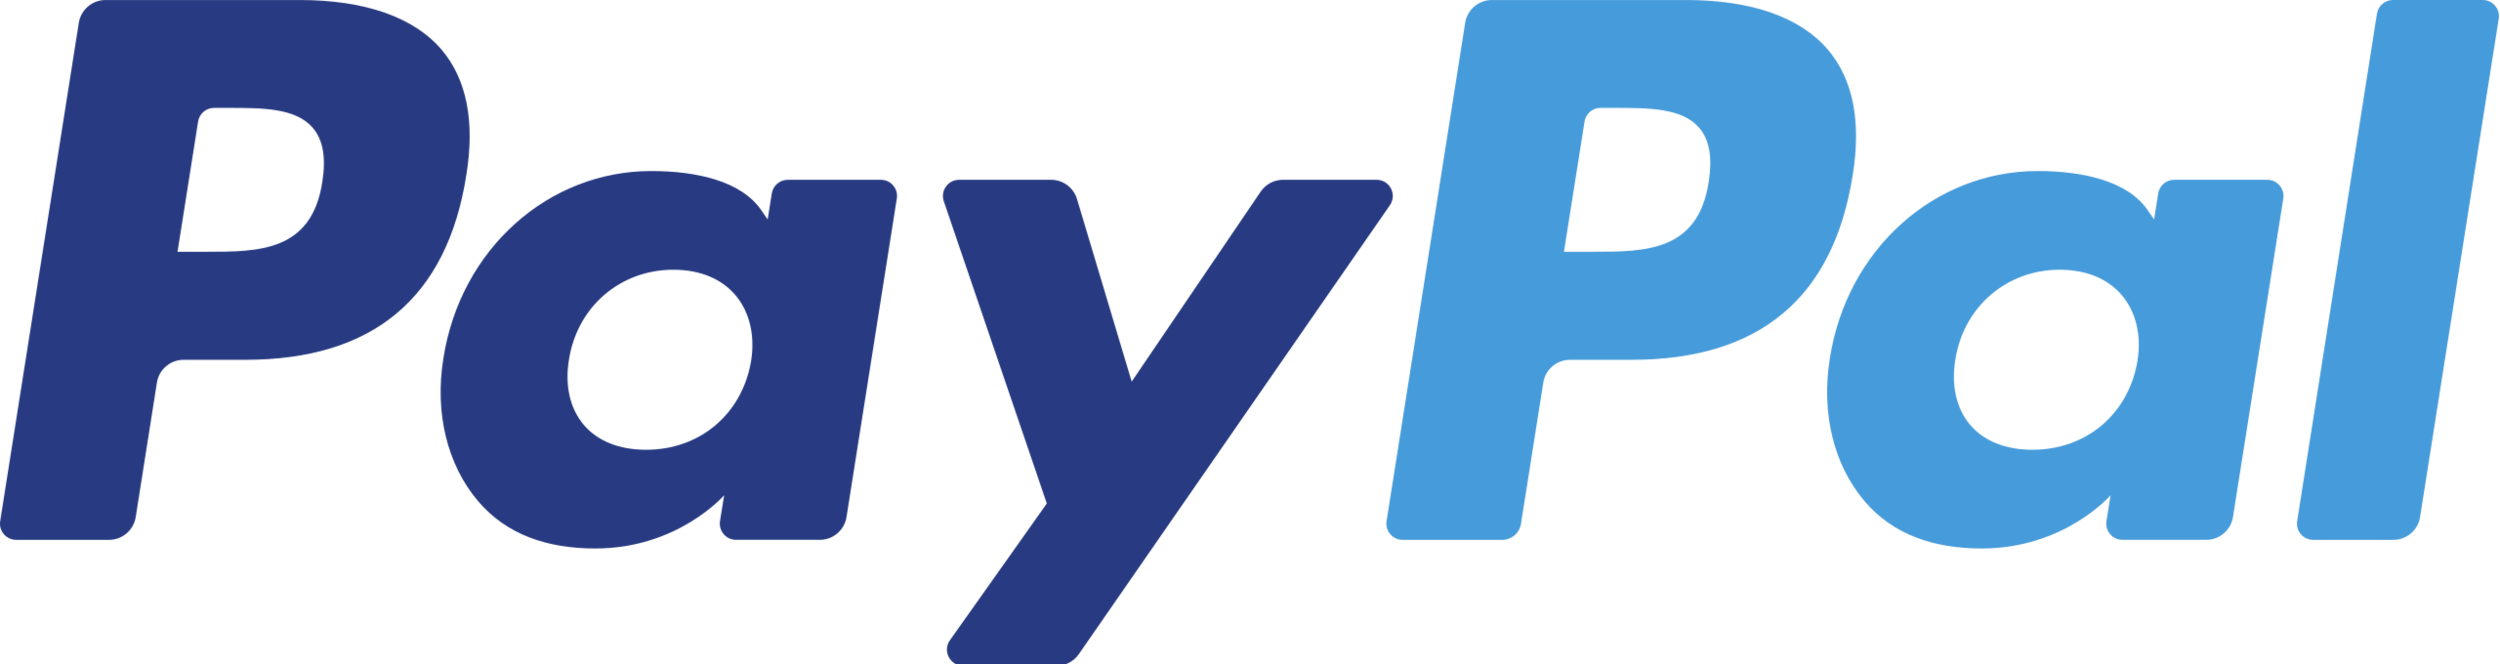 2560px-PayPal_logo.png